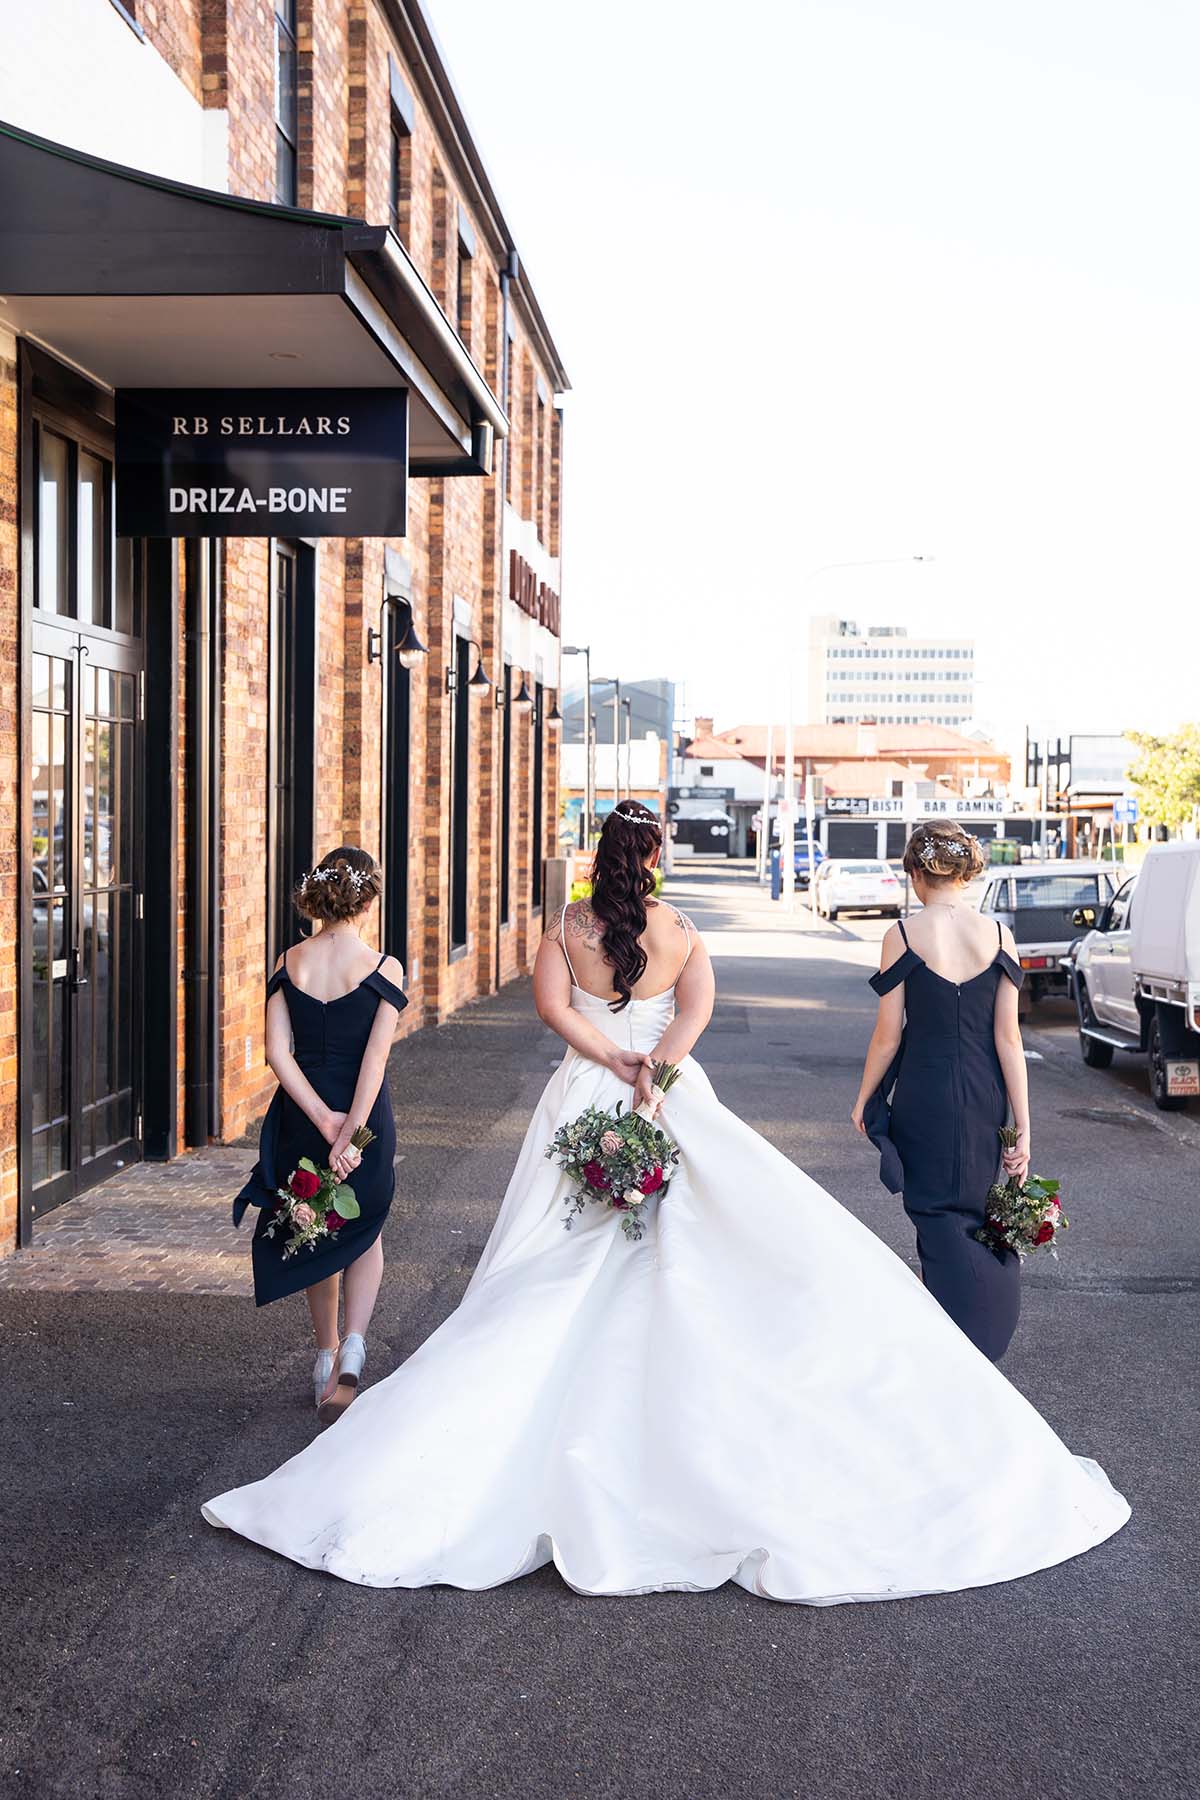 Wedding Photography - Bride and Bridesmaids walking